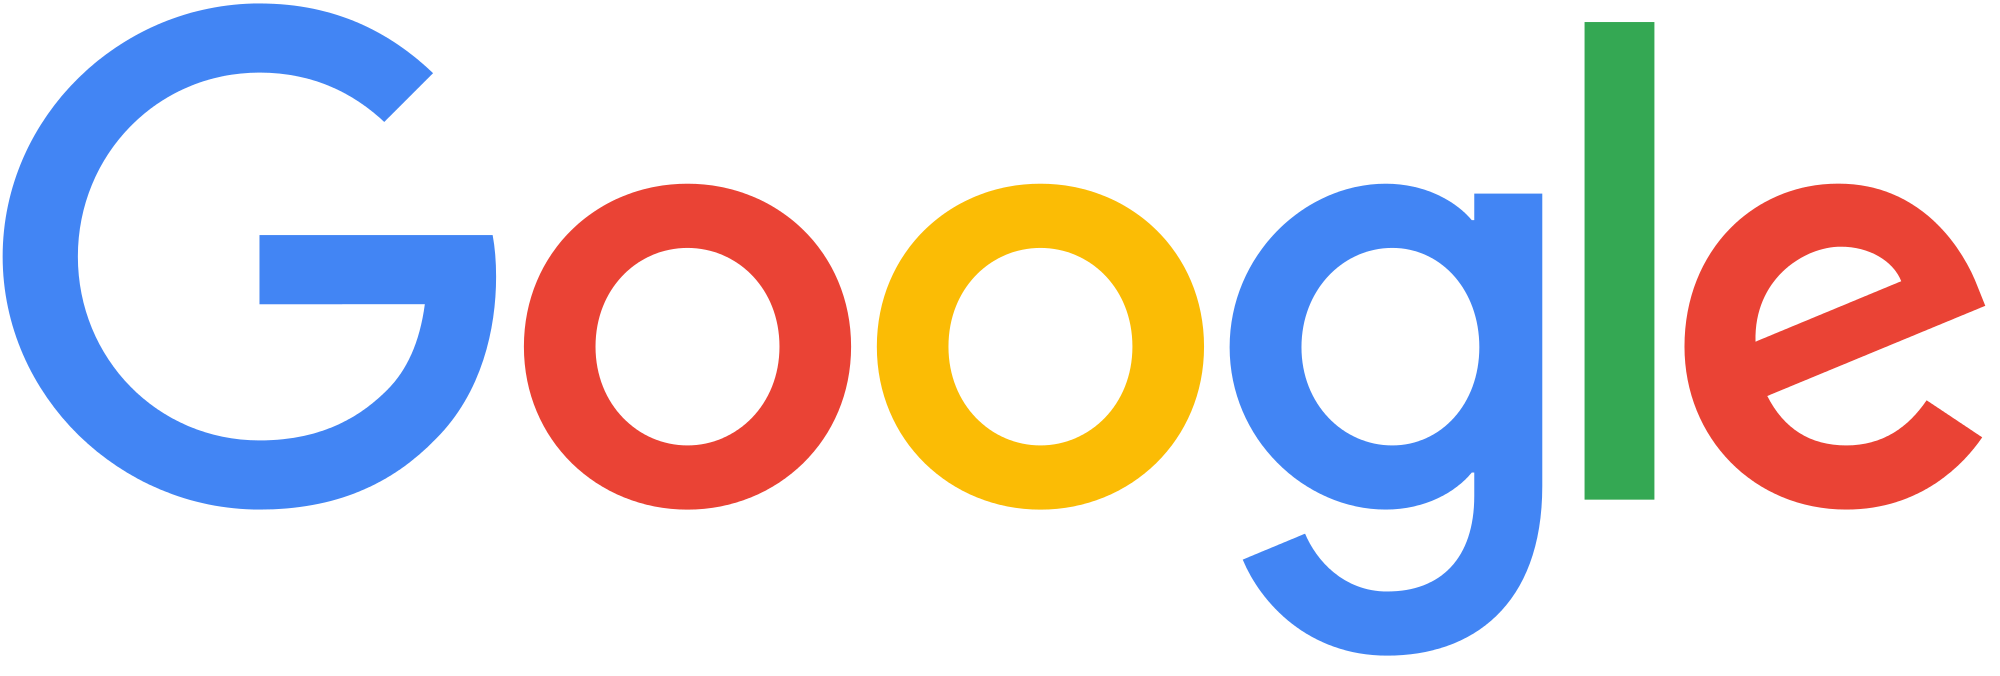 Google reveals new plans to combat online extremist content